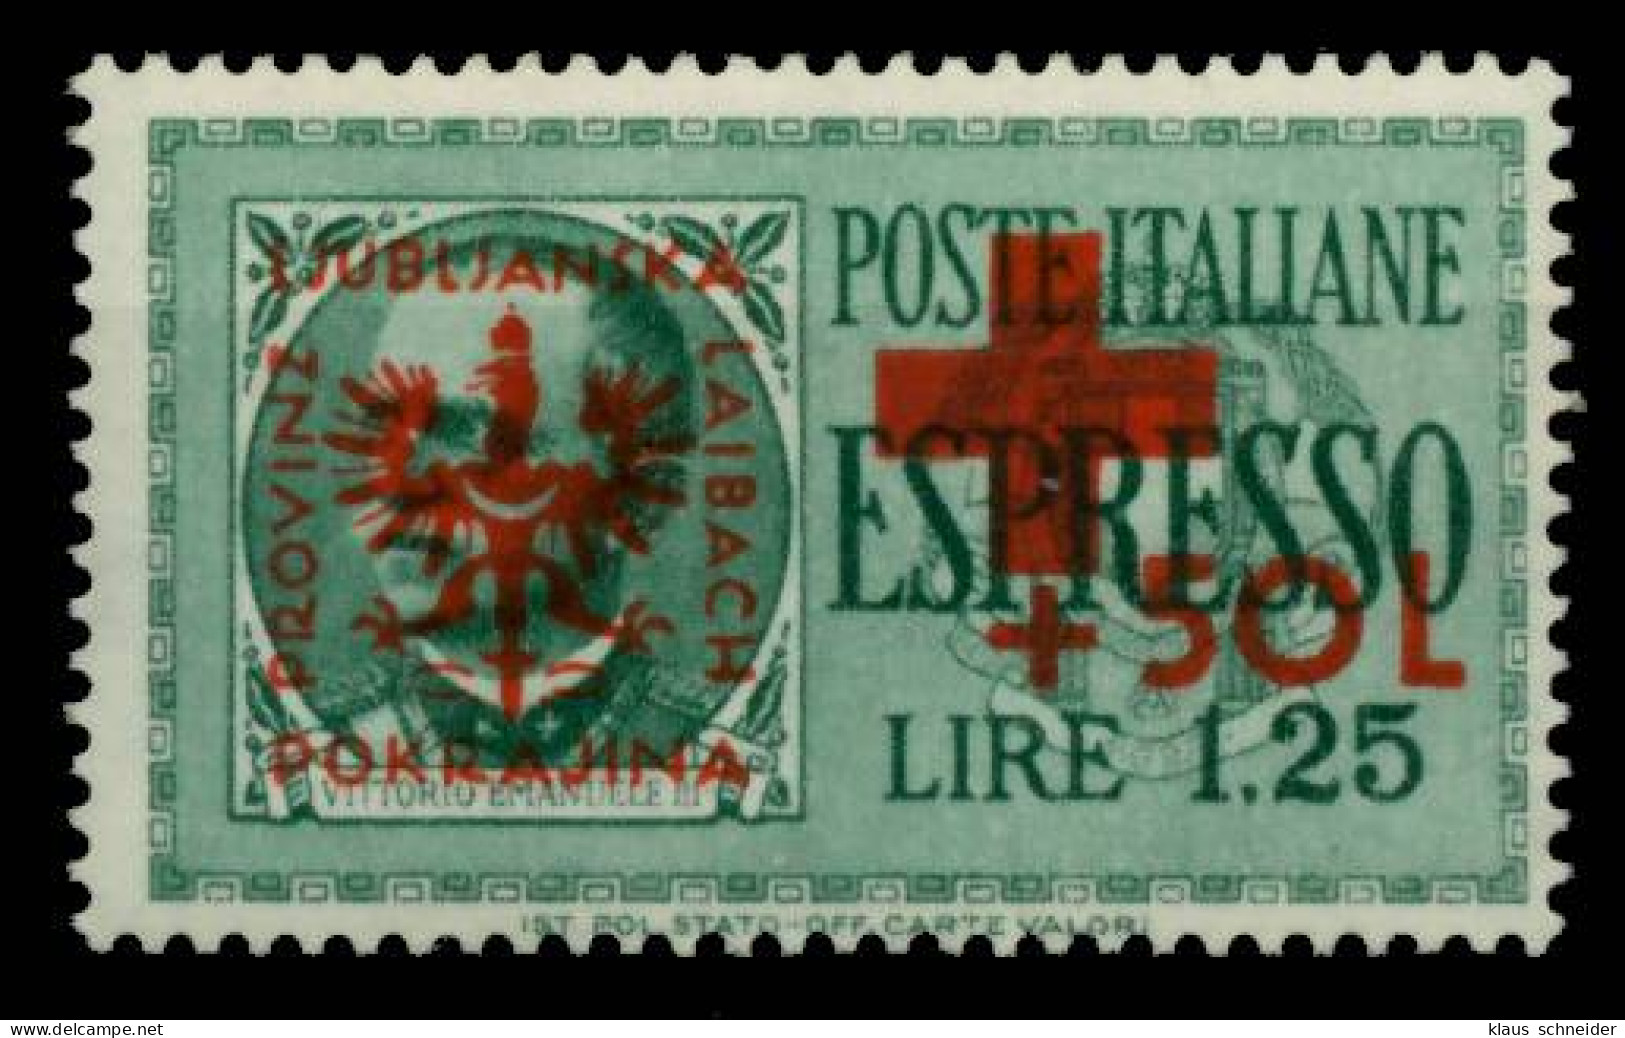 BES. 2WK LAIBACH Nr 29 Postfrisch X6B27AA - Ocupación 1938 – 45